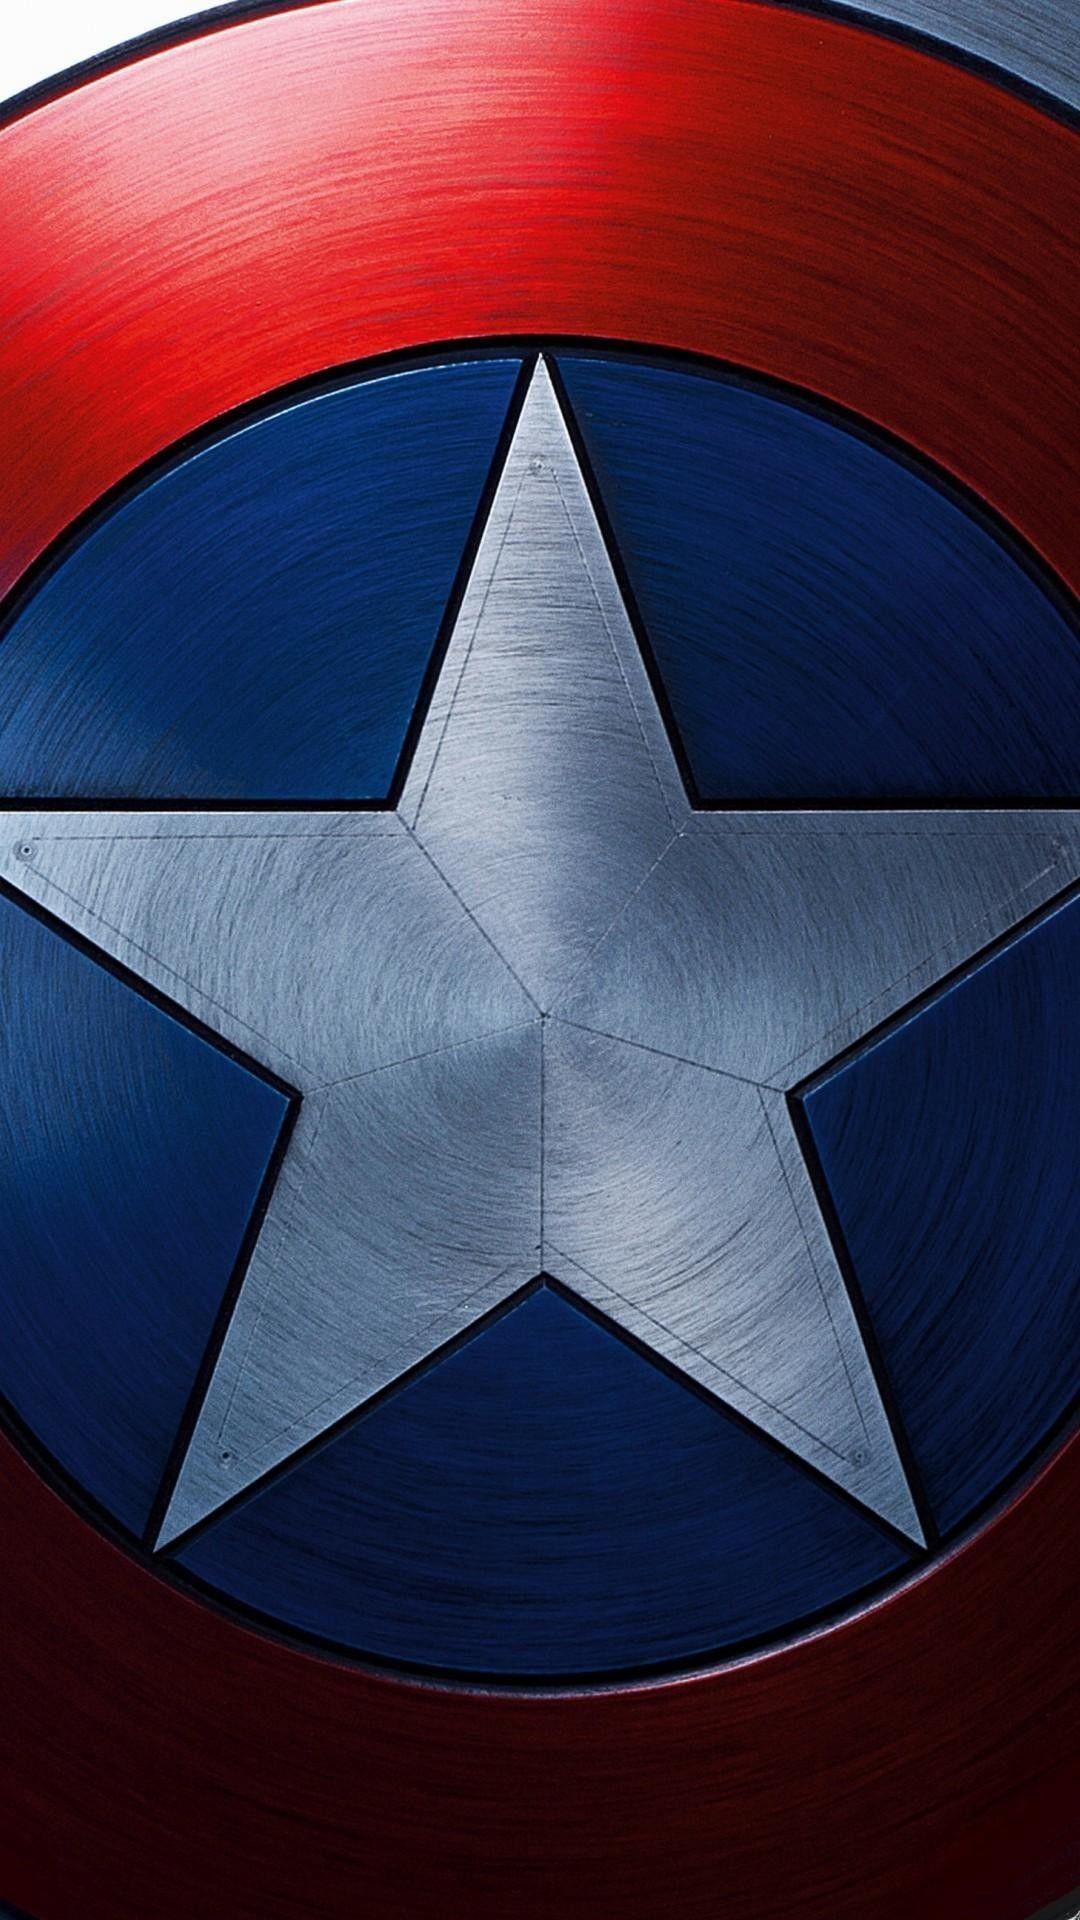 Marvel iPhone Wallpaper. Captain america